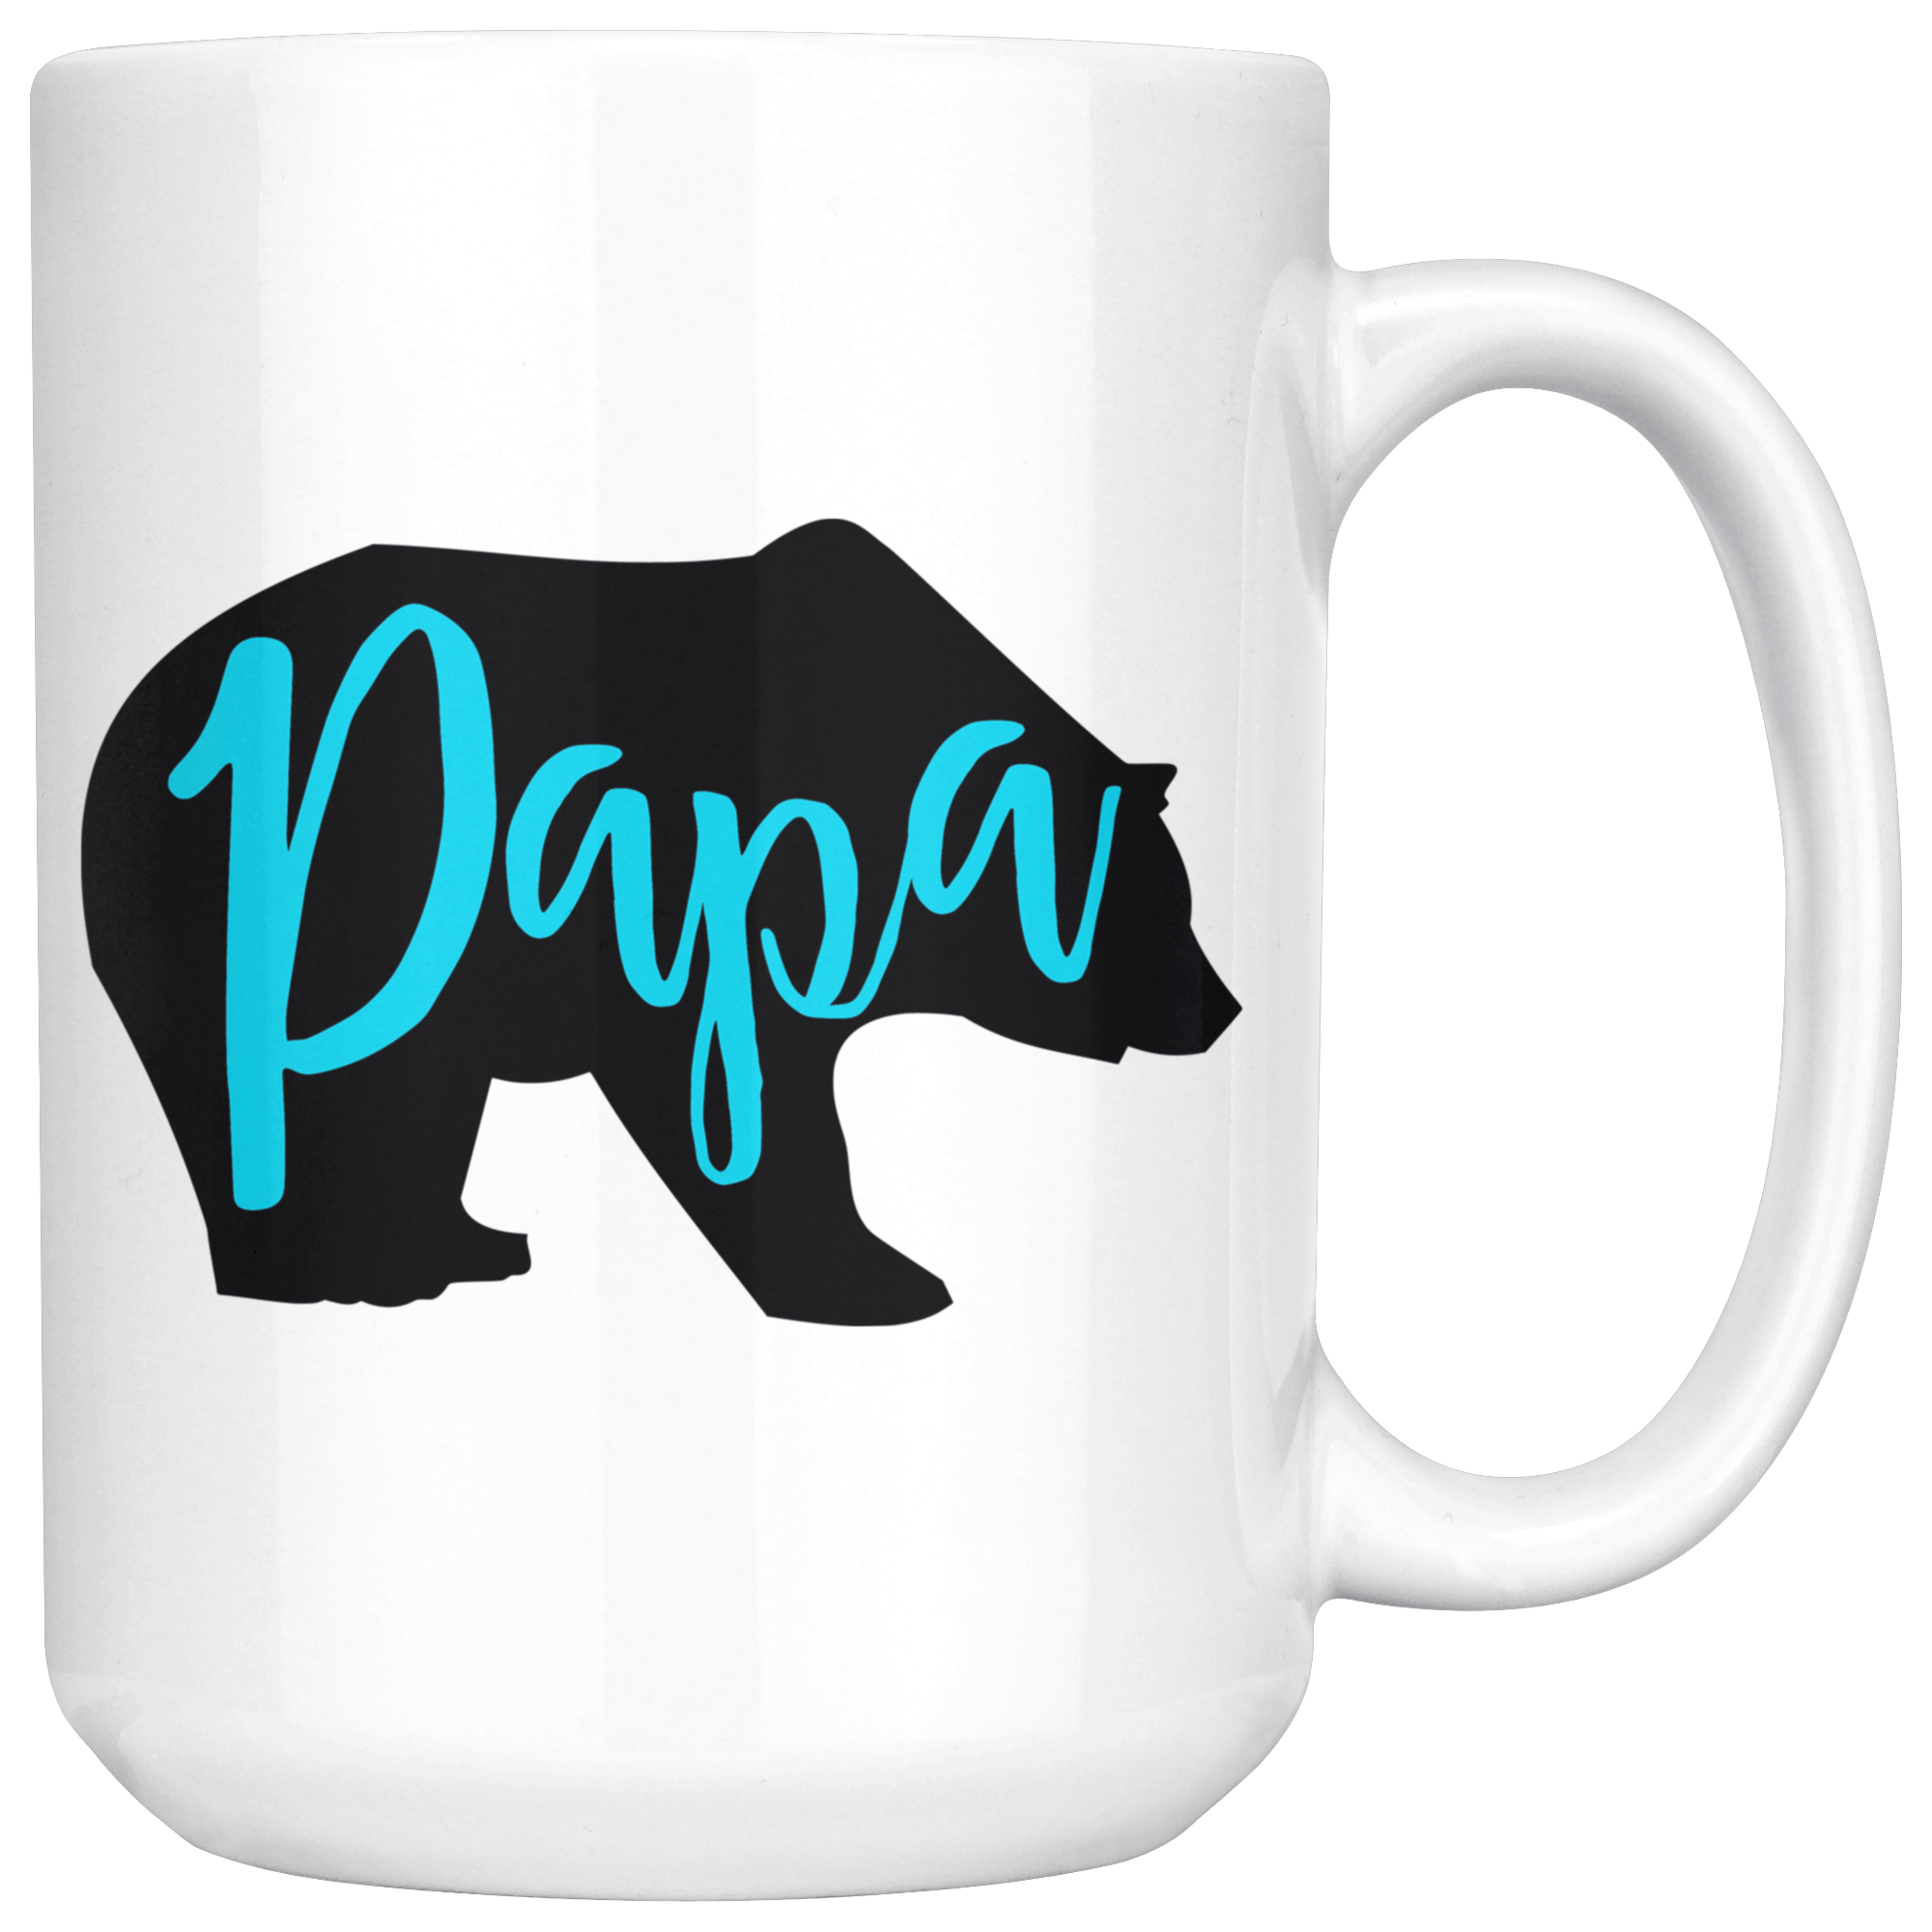 personalized coffee mugs, custom mug set mama bear and papa bear